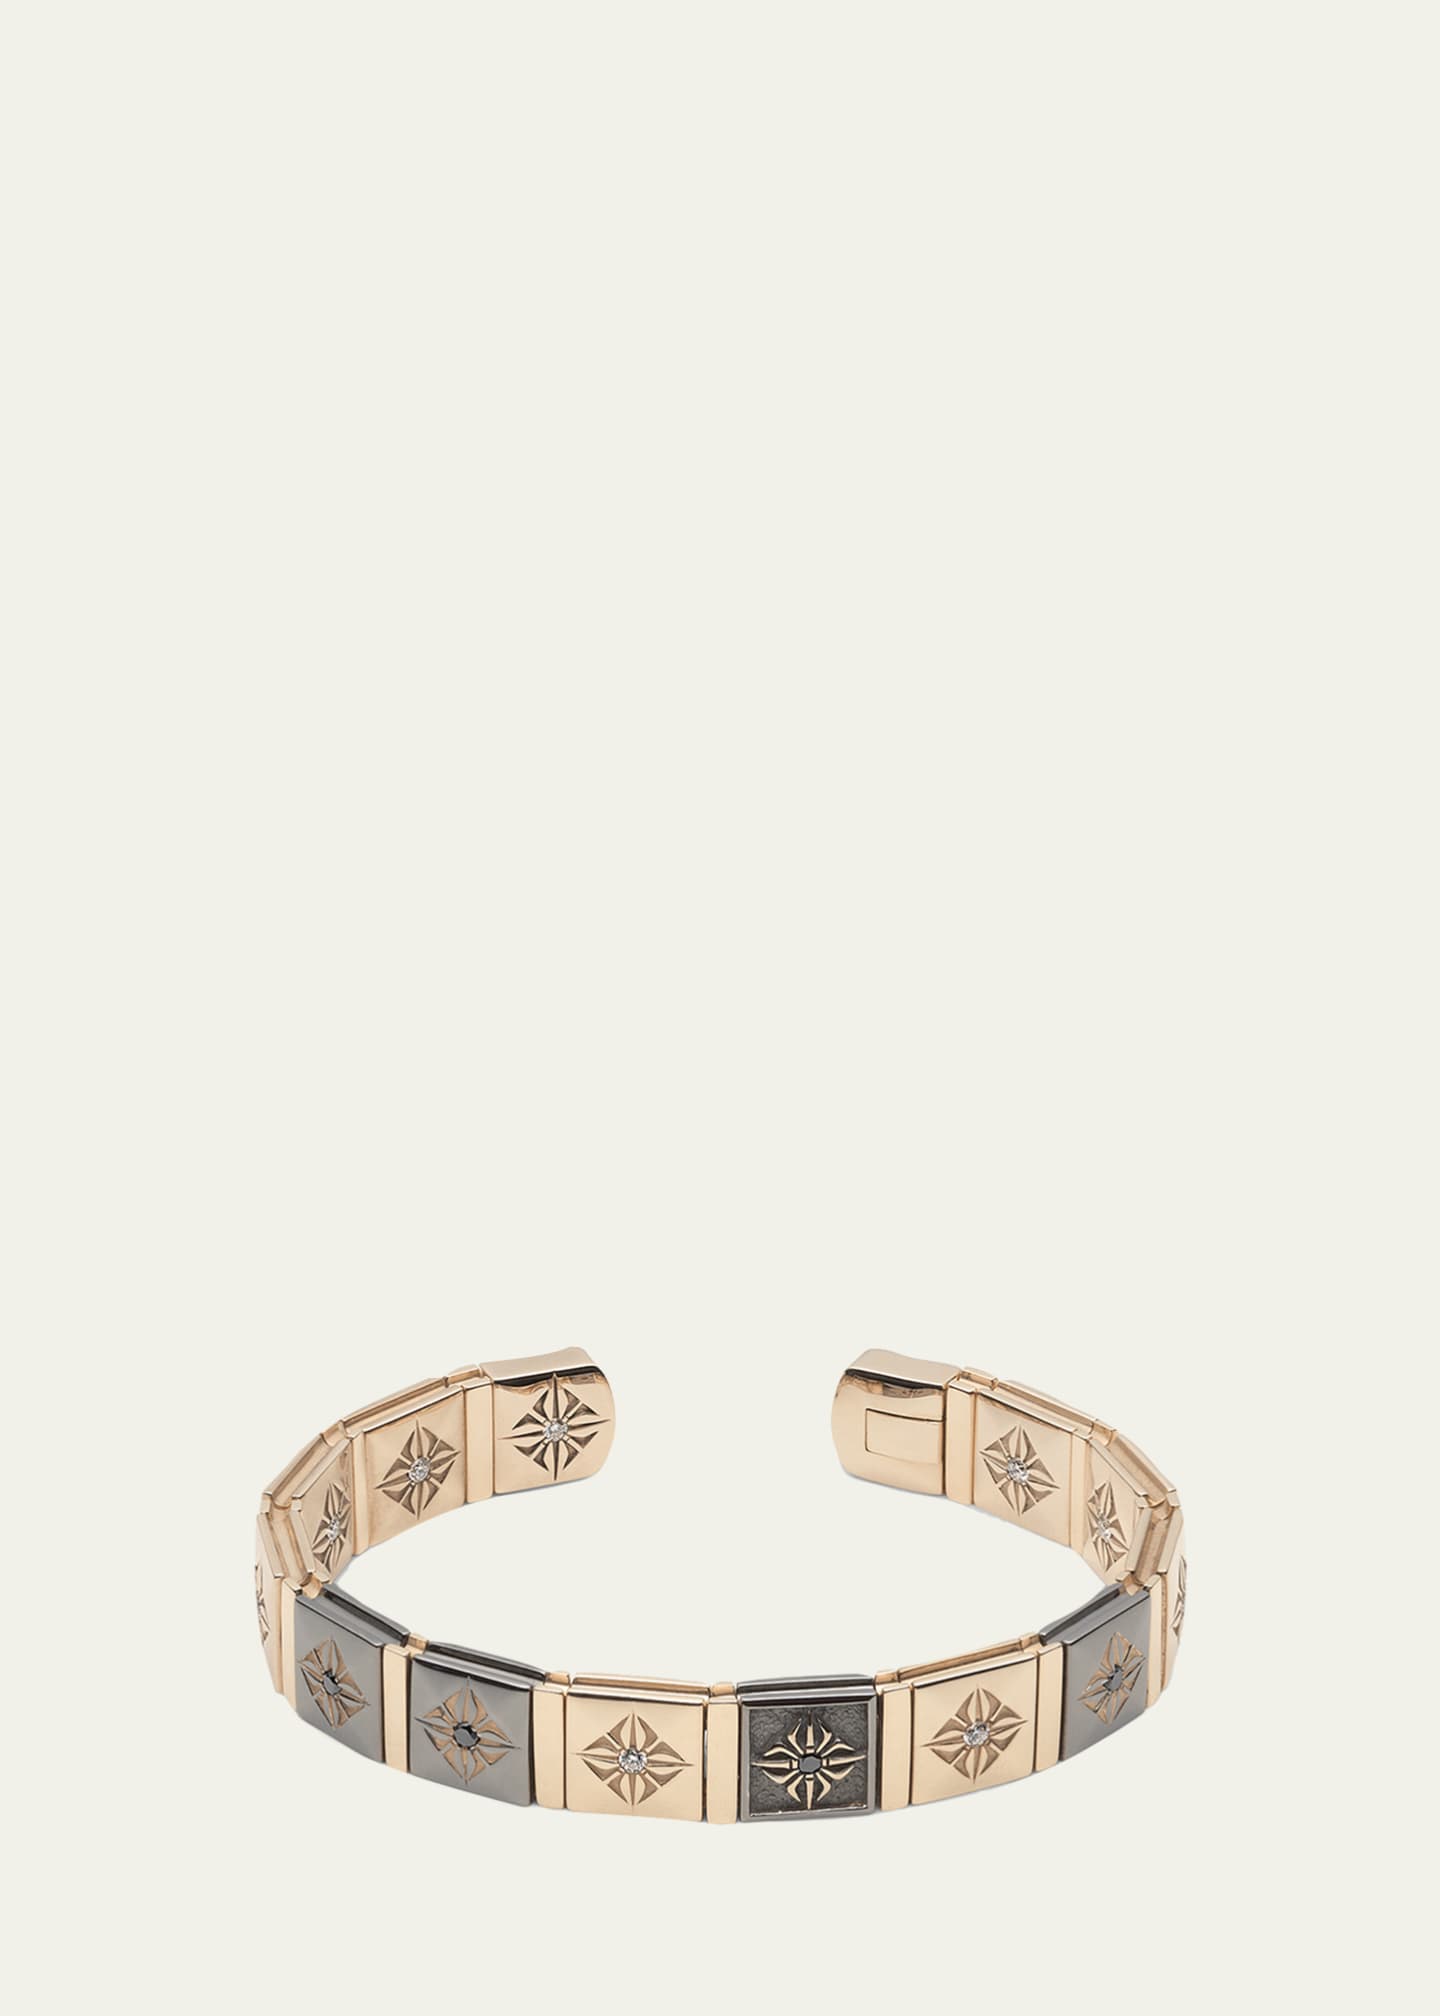 vuitton rose gold bracelet cuff